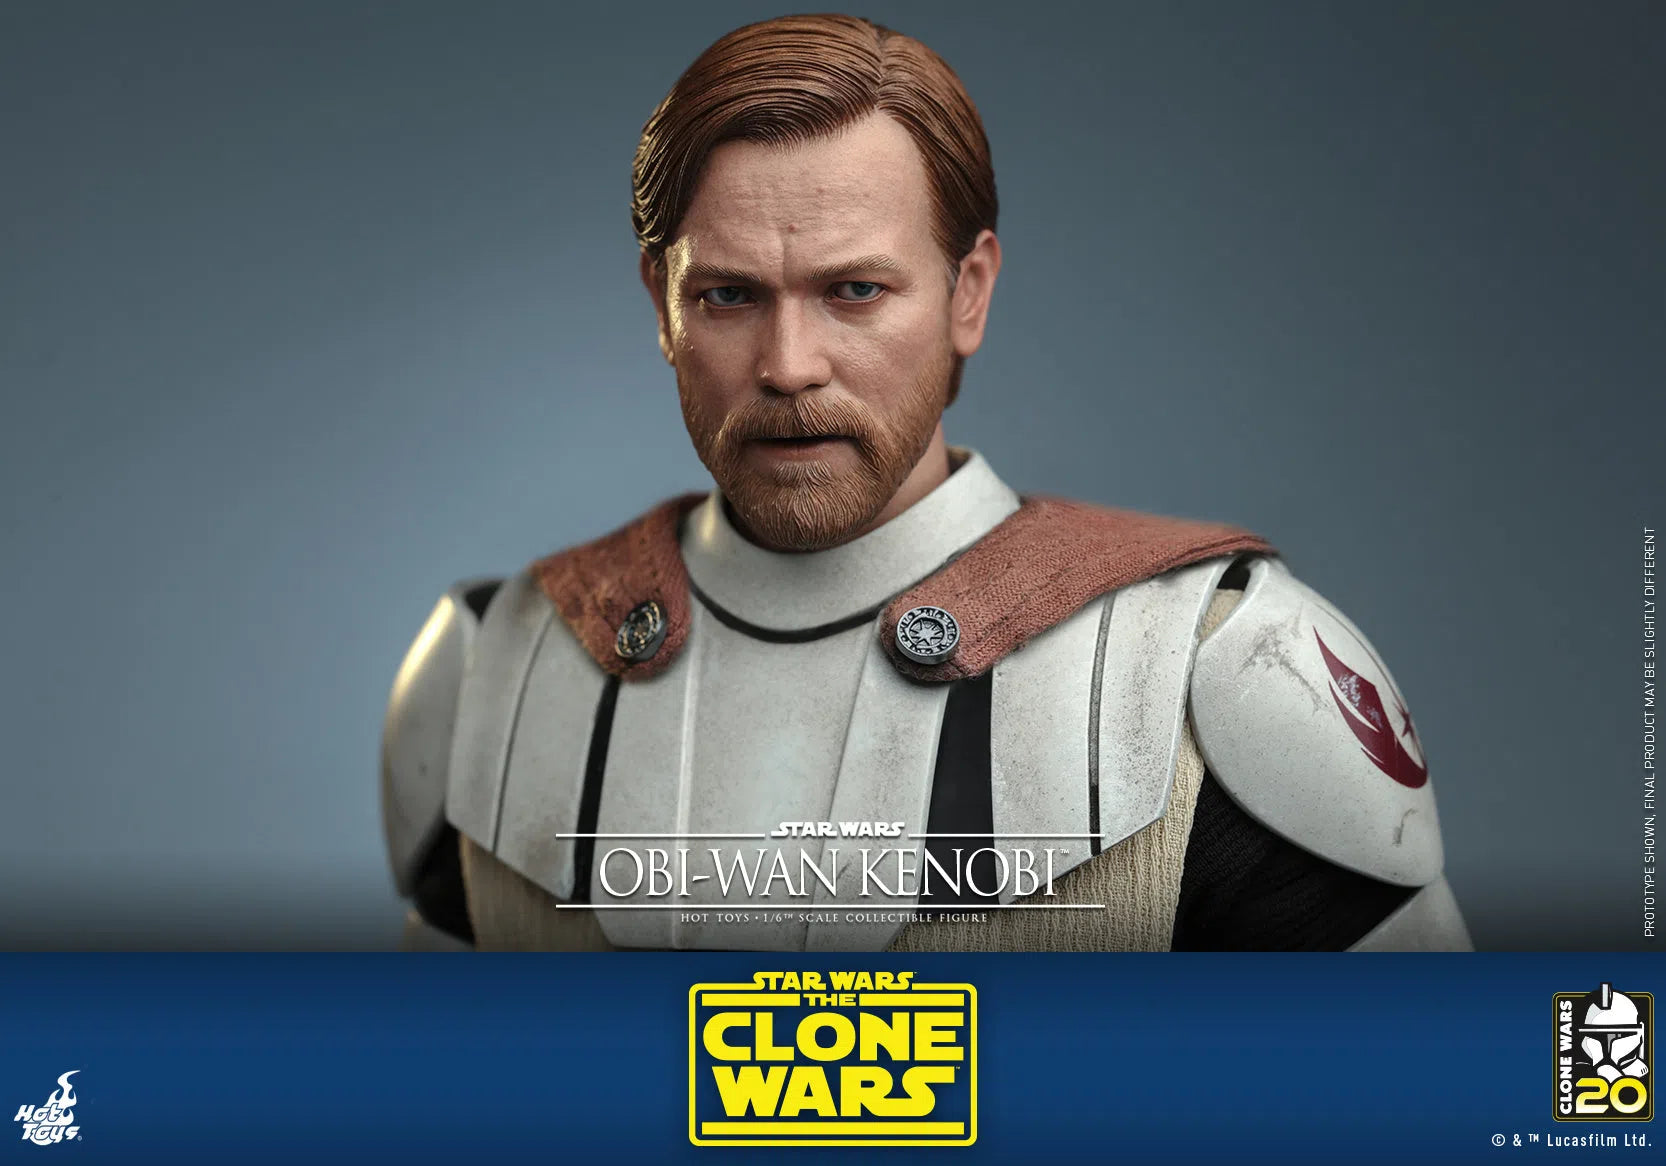 Obi-Wan Kenobi: Star Wars Episode II: Attack Of The Clones: Hot Toys